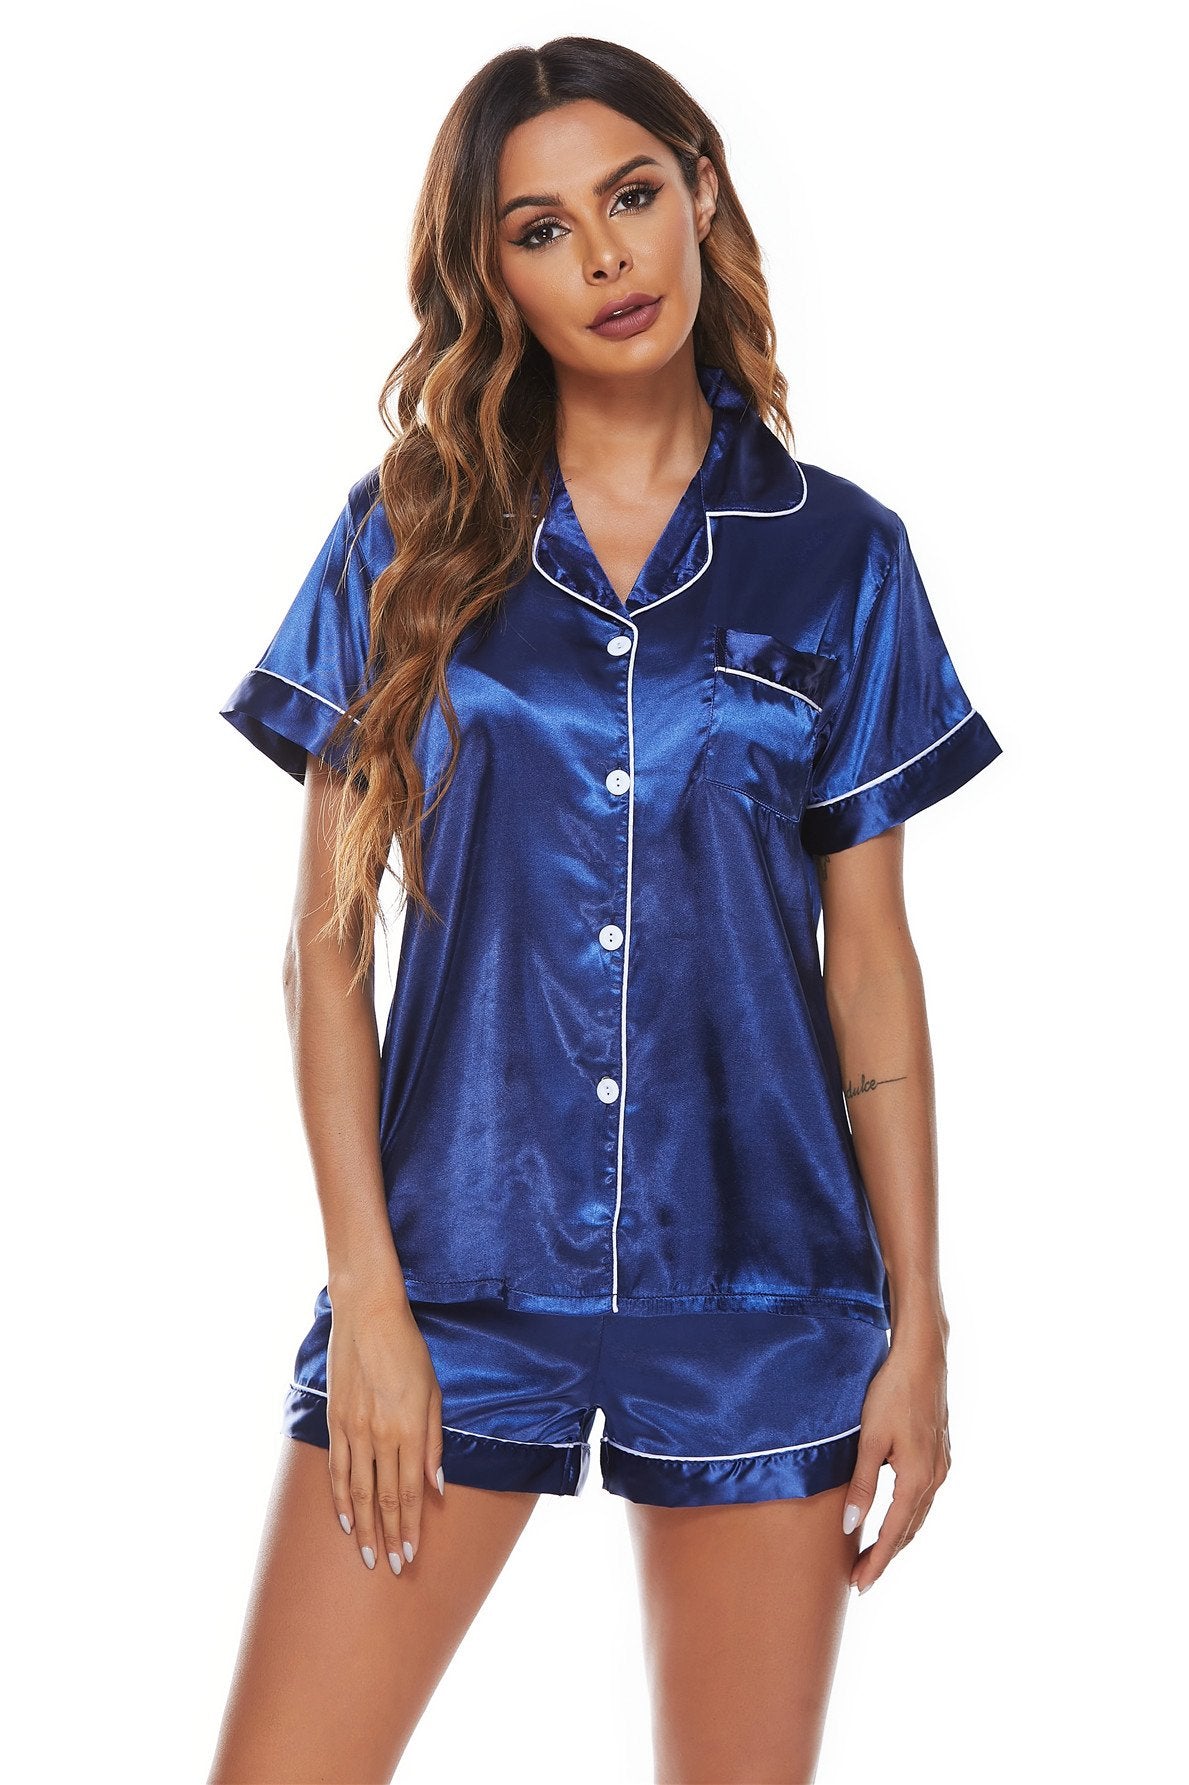 Buy Satin Pajama Set Short Sleeve Satin Women Loungewear from Elowel